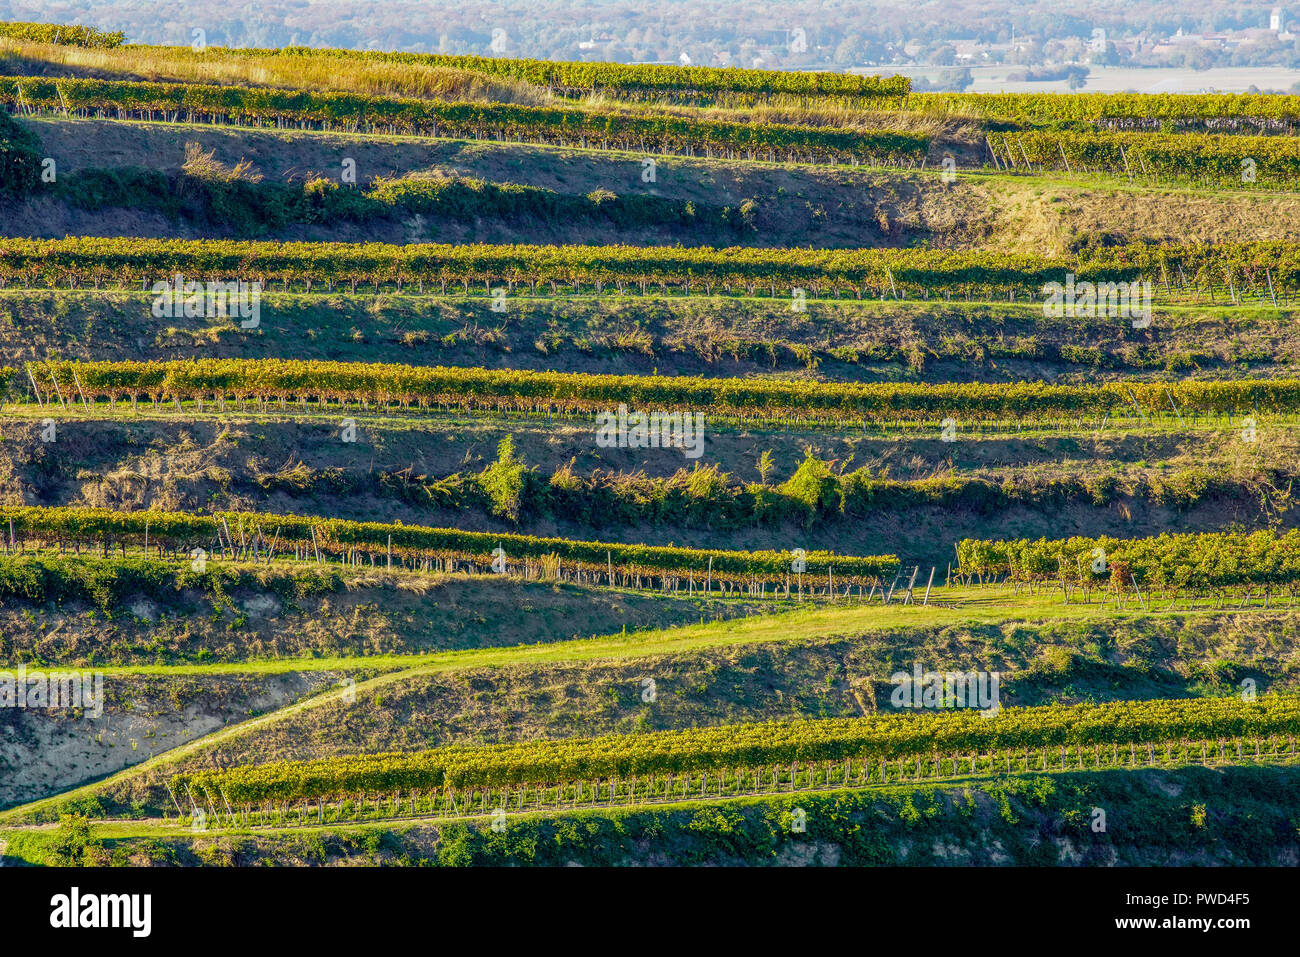 Picturesque terraced field vineyards in autumn colors in Endingen am Kaiserstuhl, Germany. Stock Photo